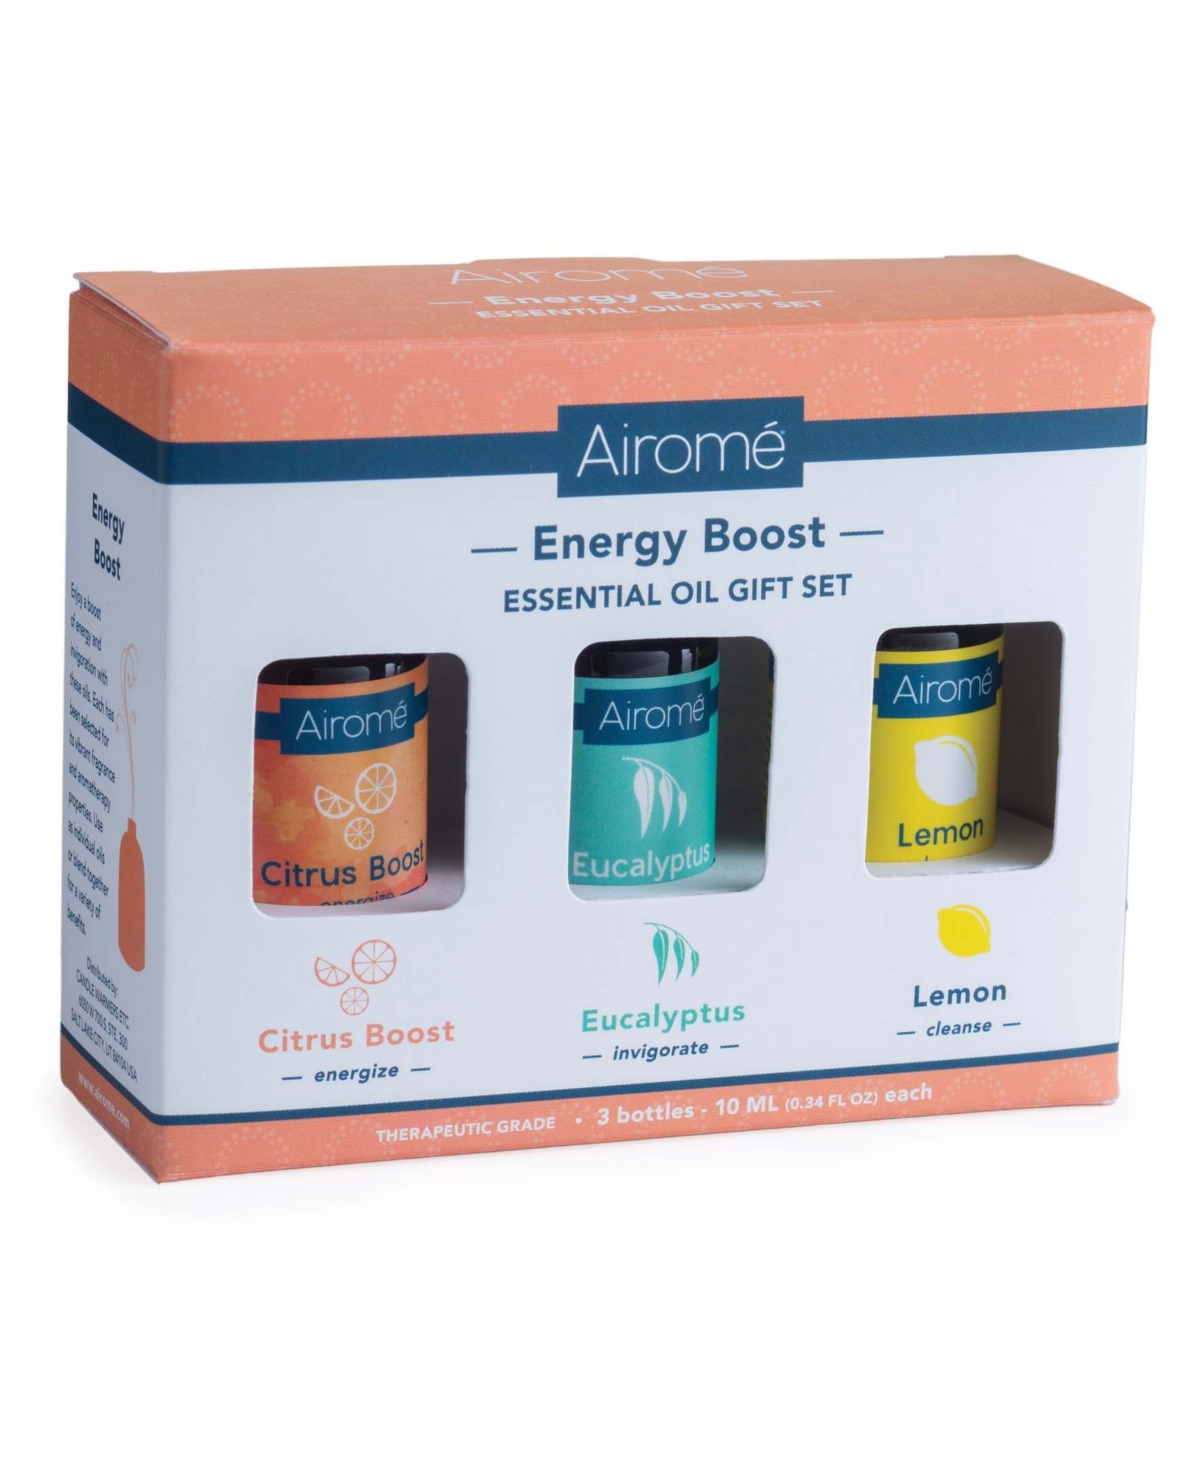 Airome Energy Boost Gift Set, 3 Piece In Citrus Boost/eucalyptus/lemon